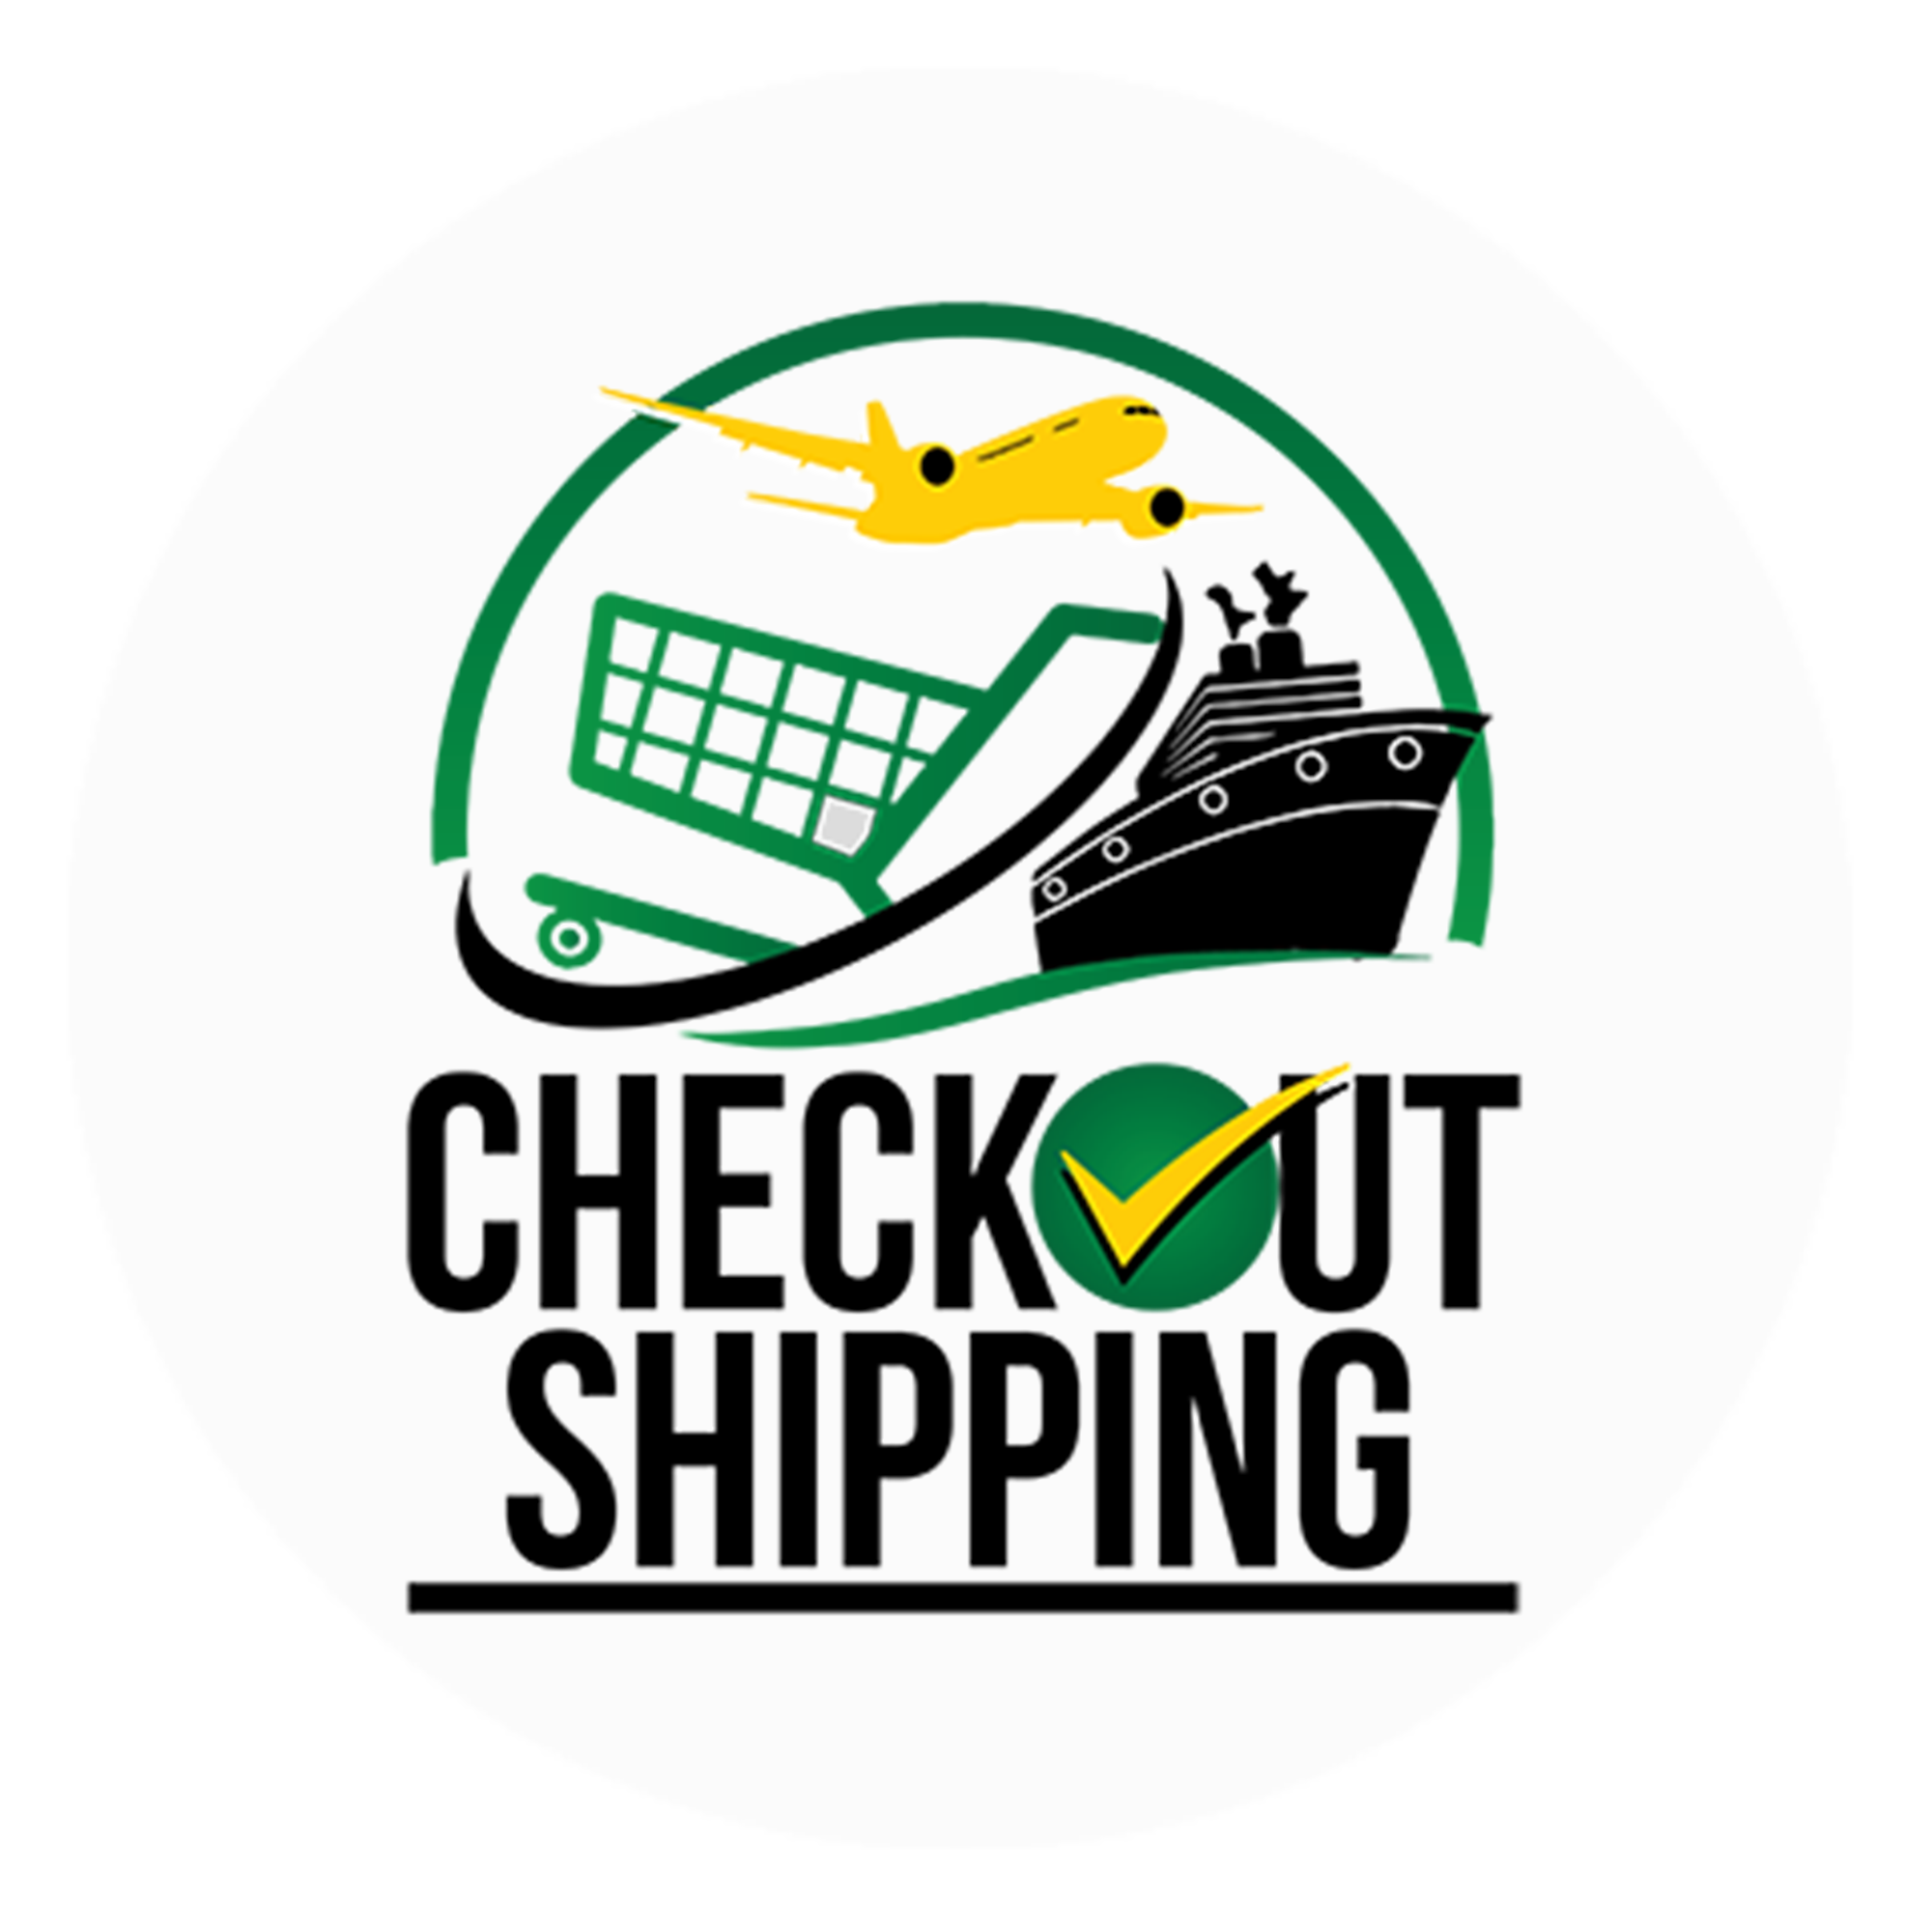 Checkout Shipping Express